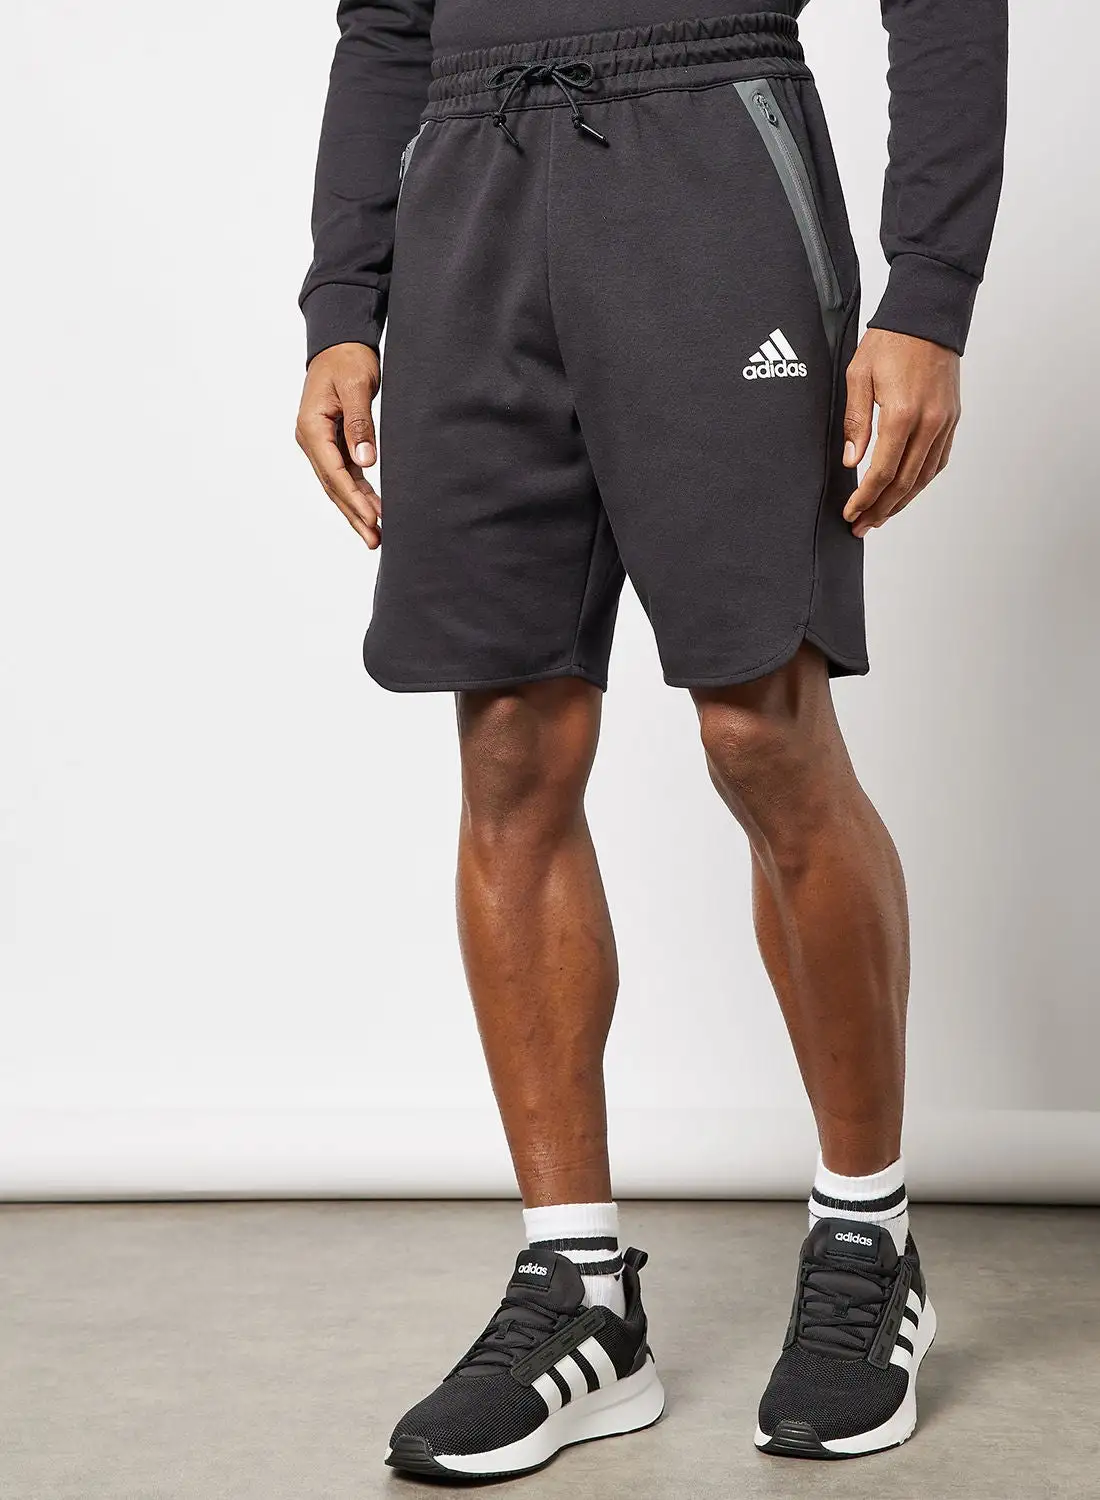 Adidas Designed For Gameday Shorts